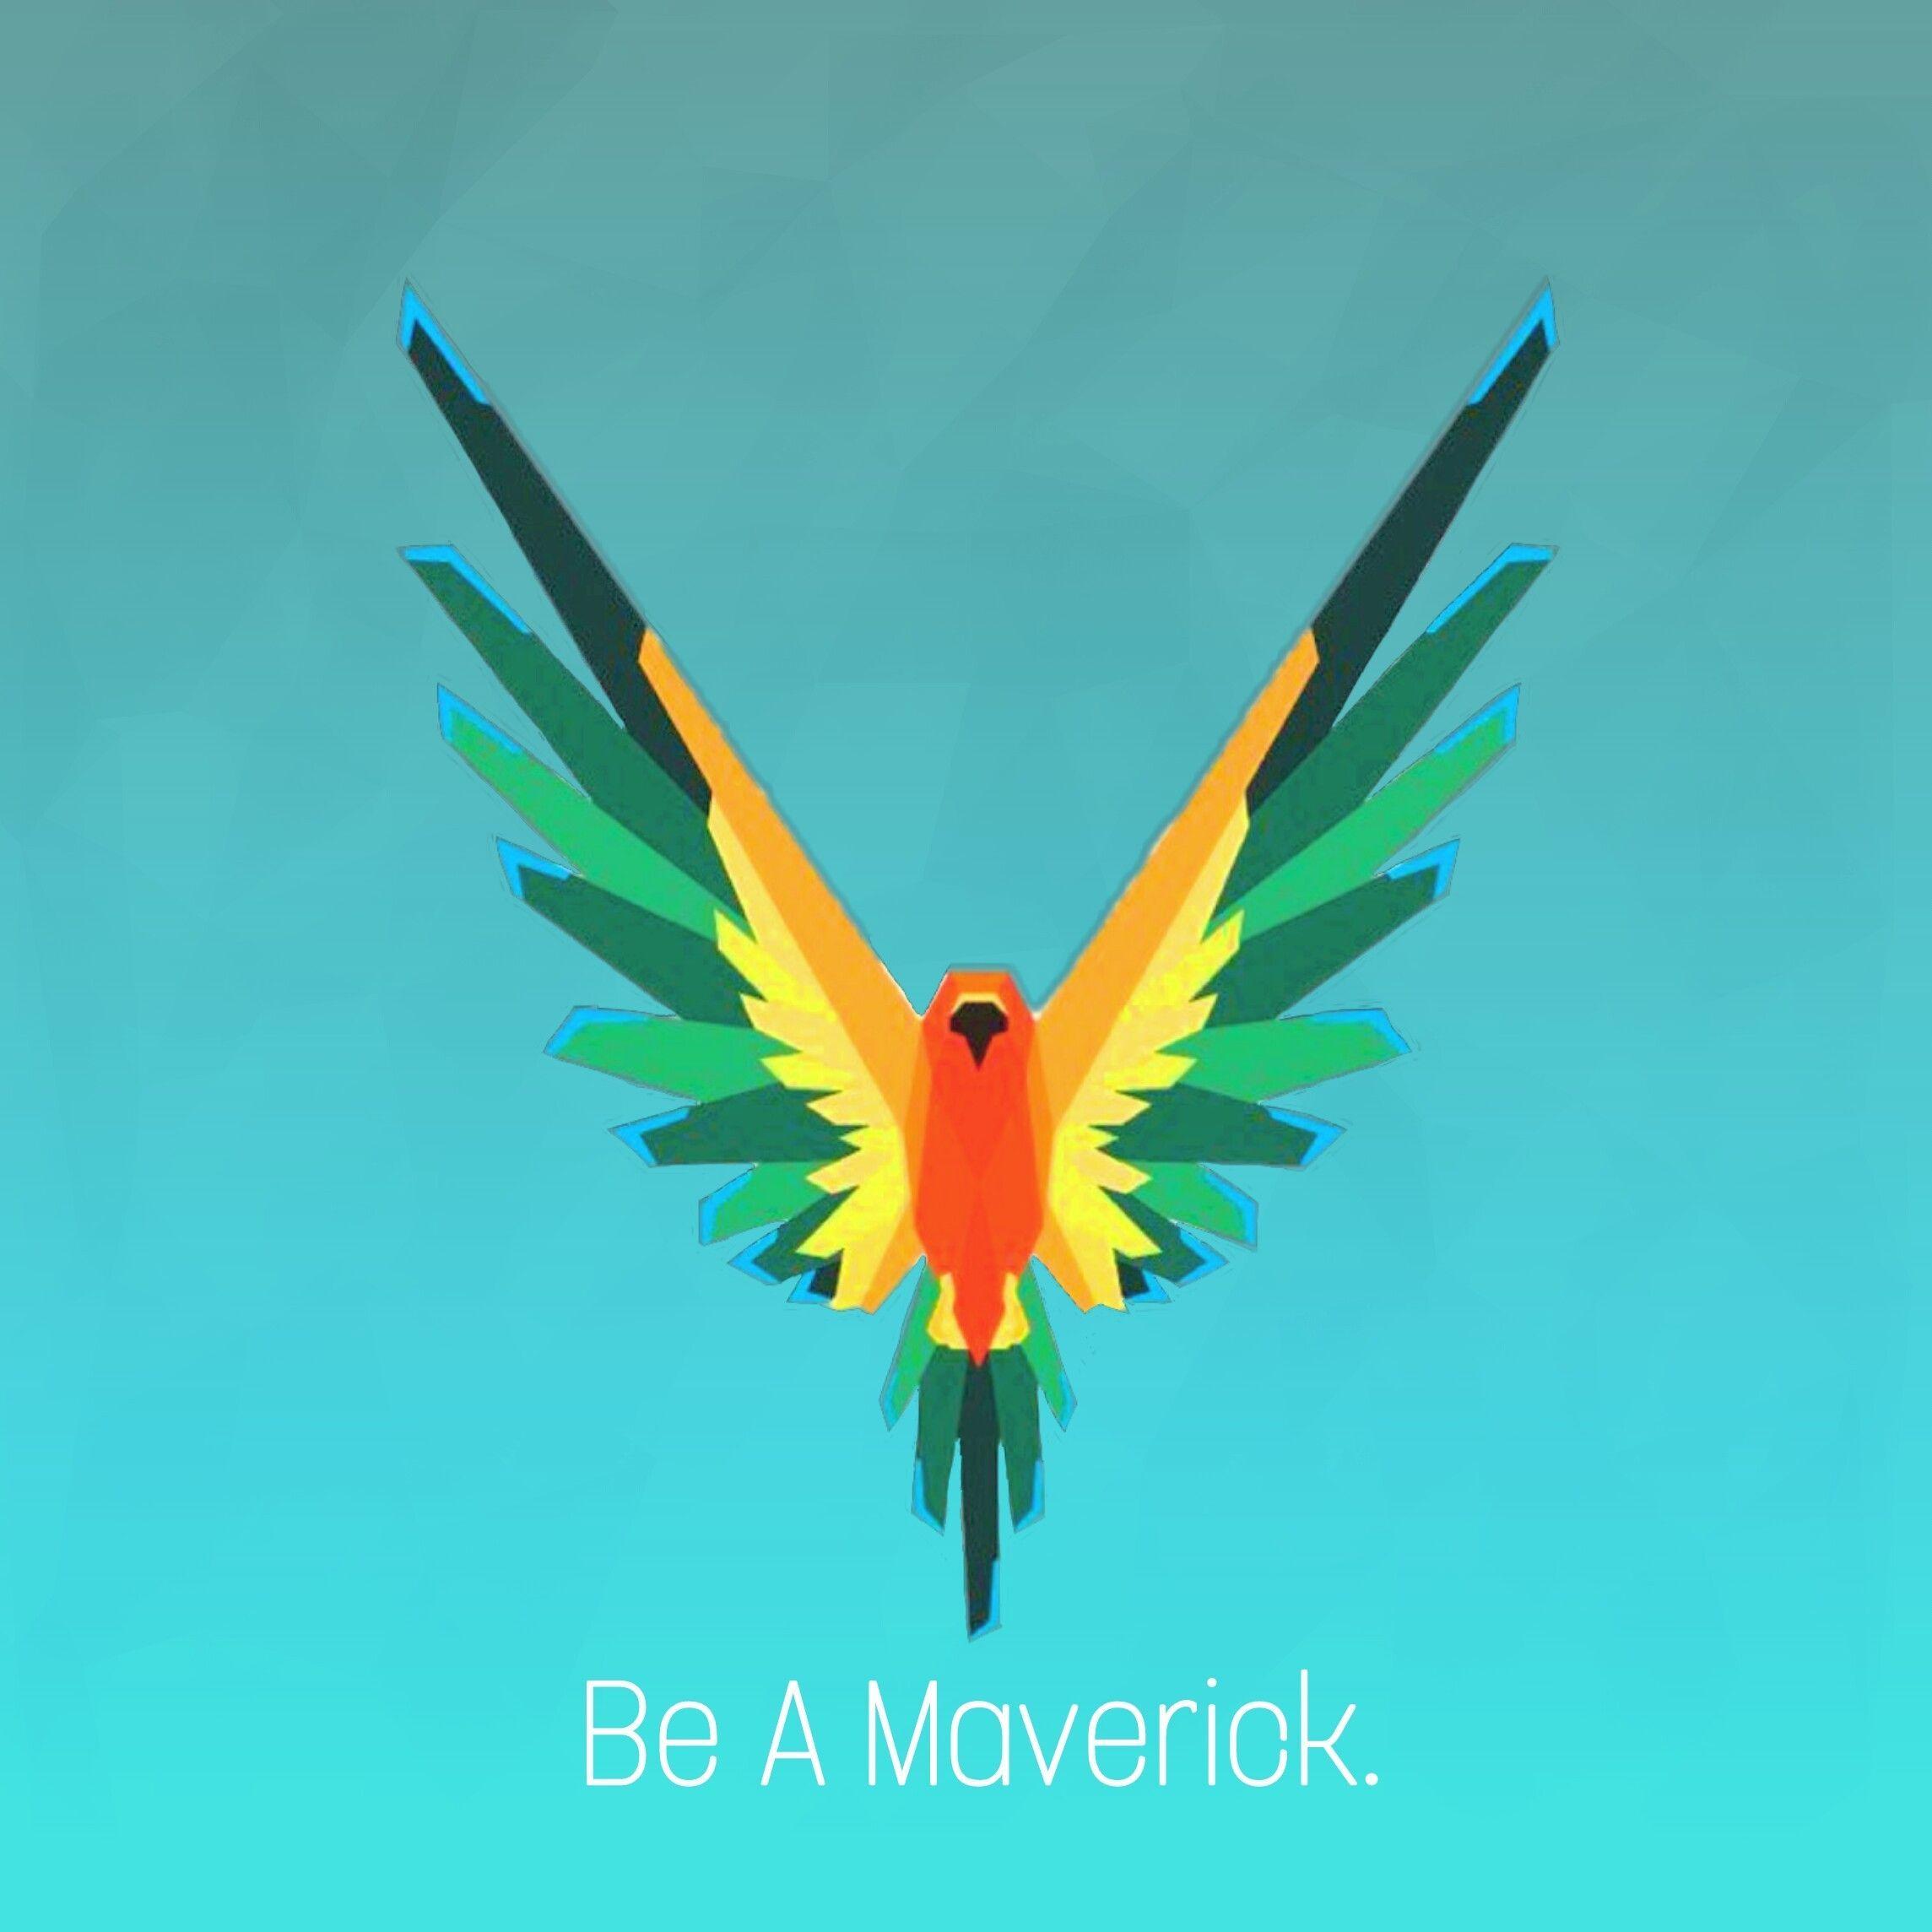 Maverick Bird Logo - Image result for maverick logan paul logo | Logan Paul | Logan paul ...